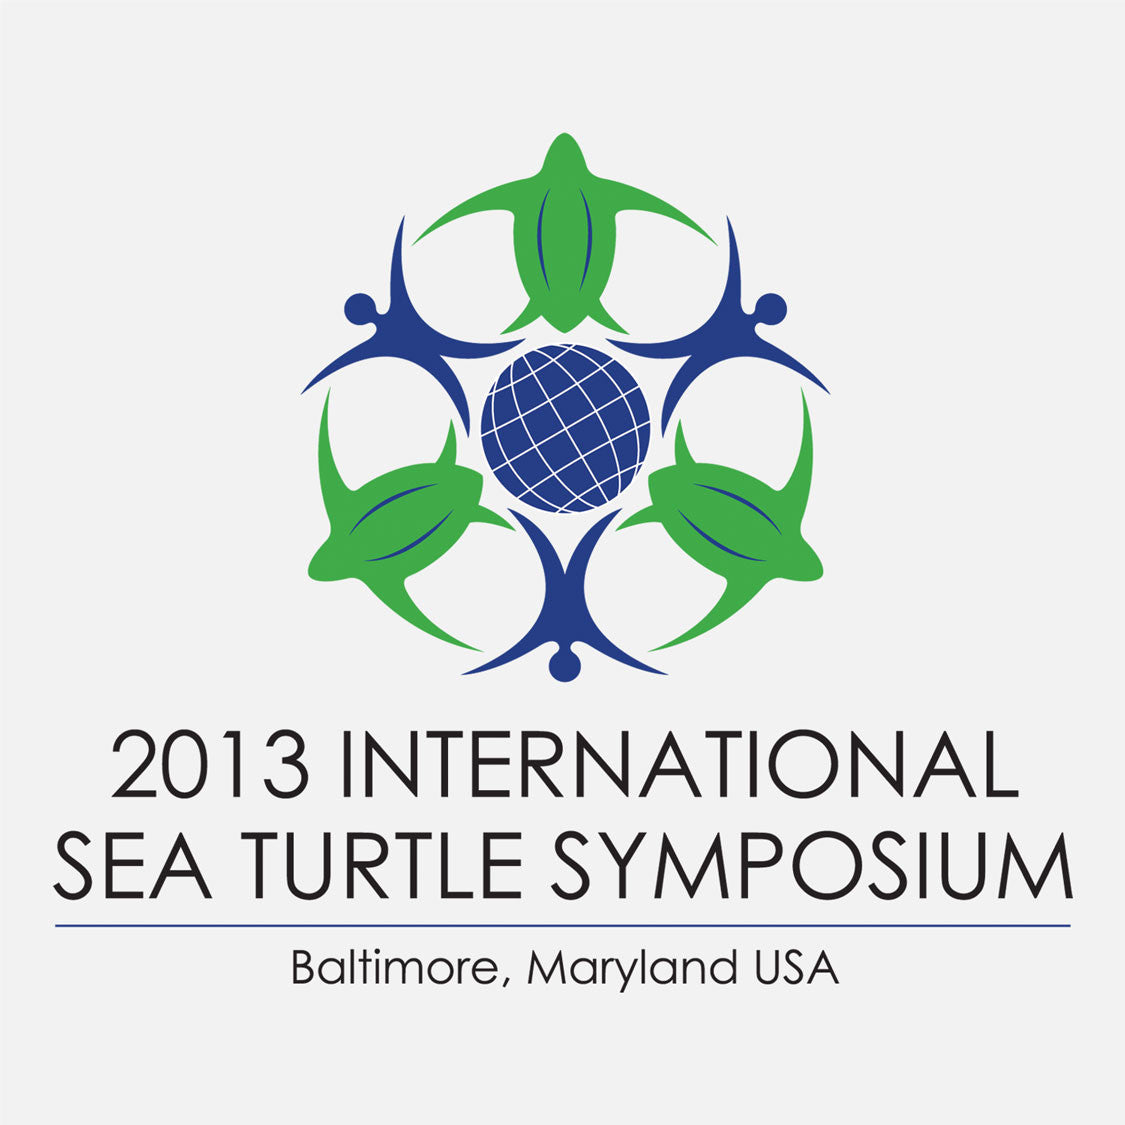 The 33rd annual sea turtle symposium logo. The theme was 